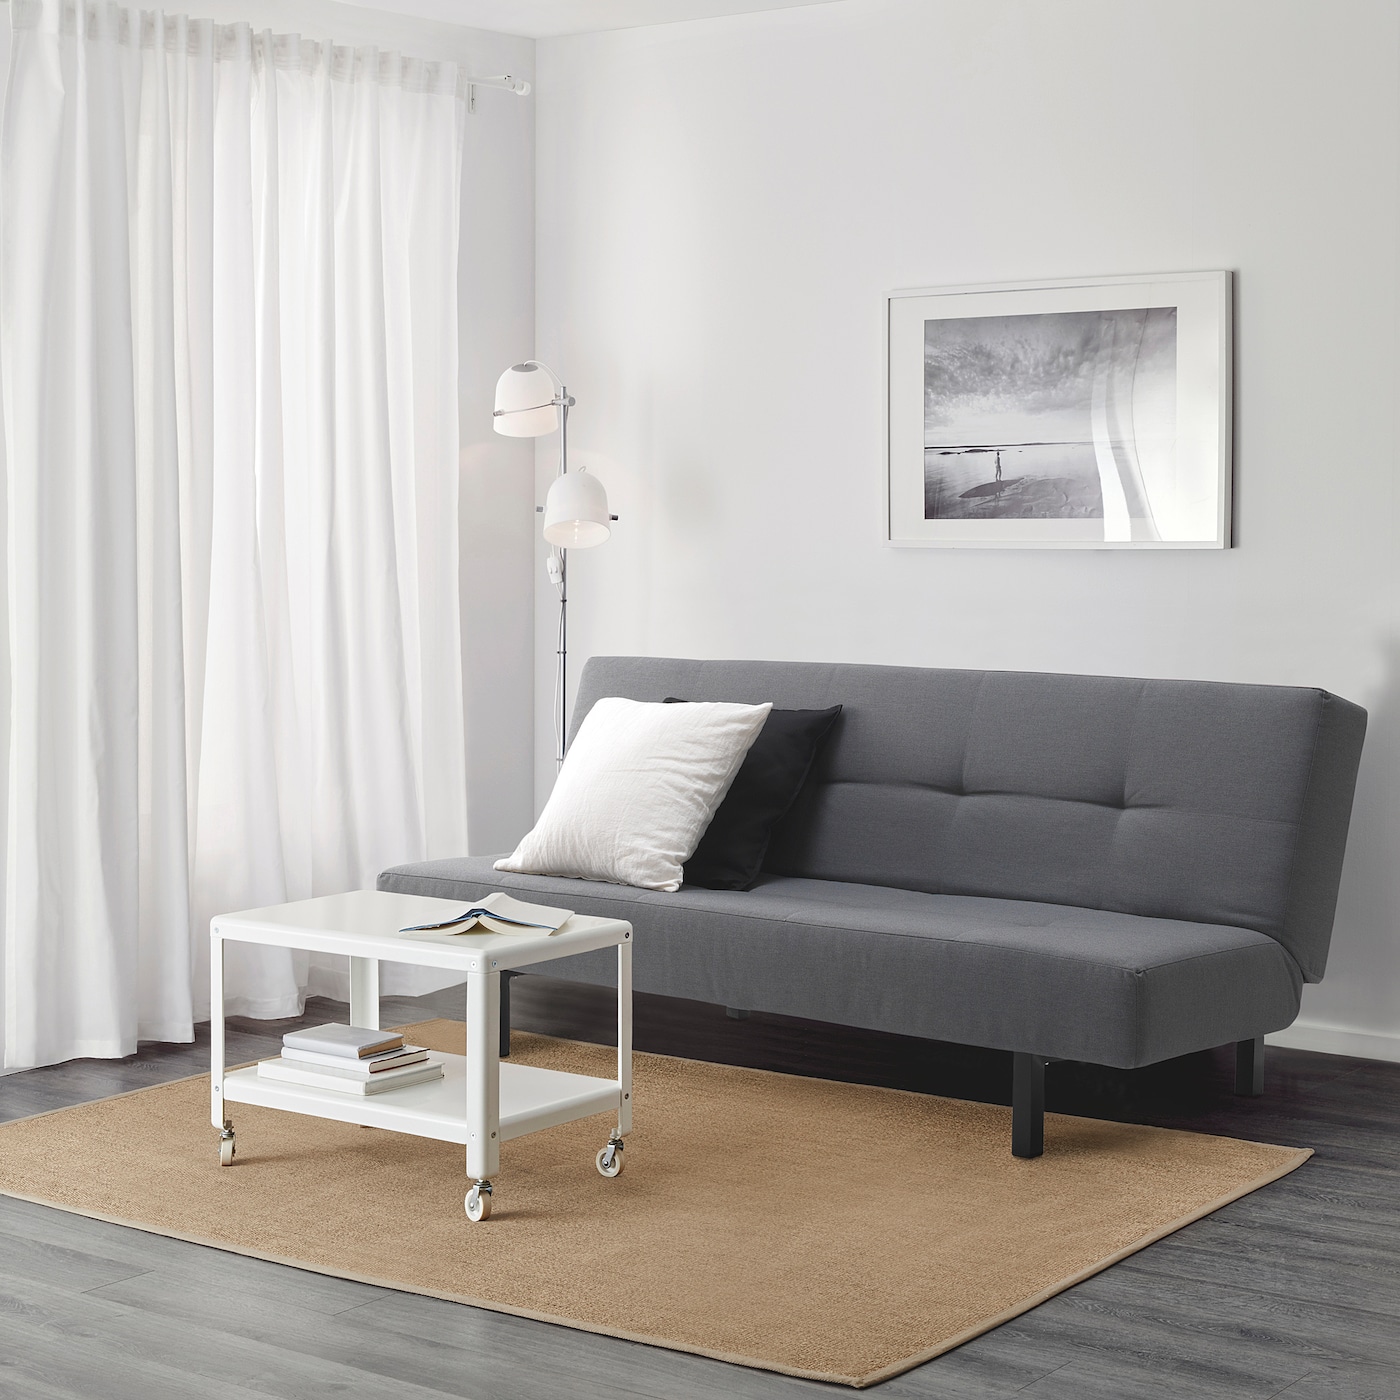 Grey sofa bed from IKEA